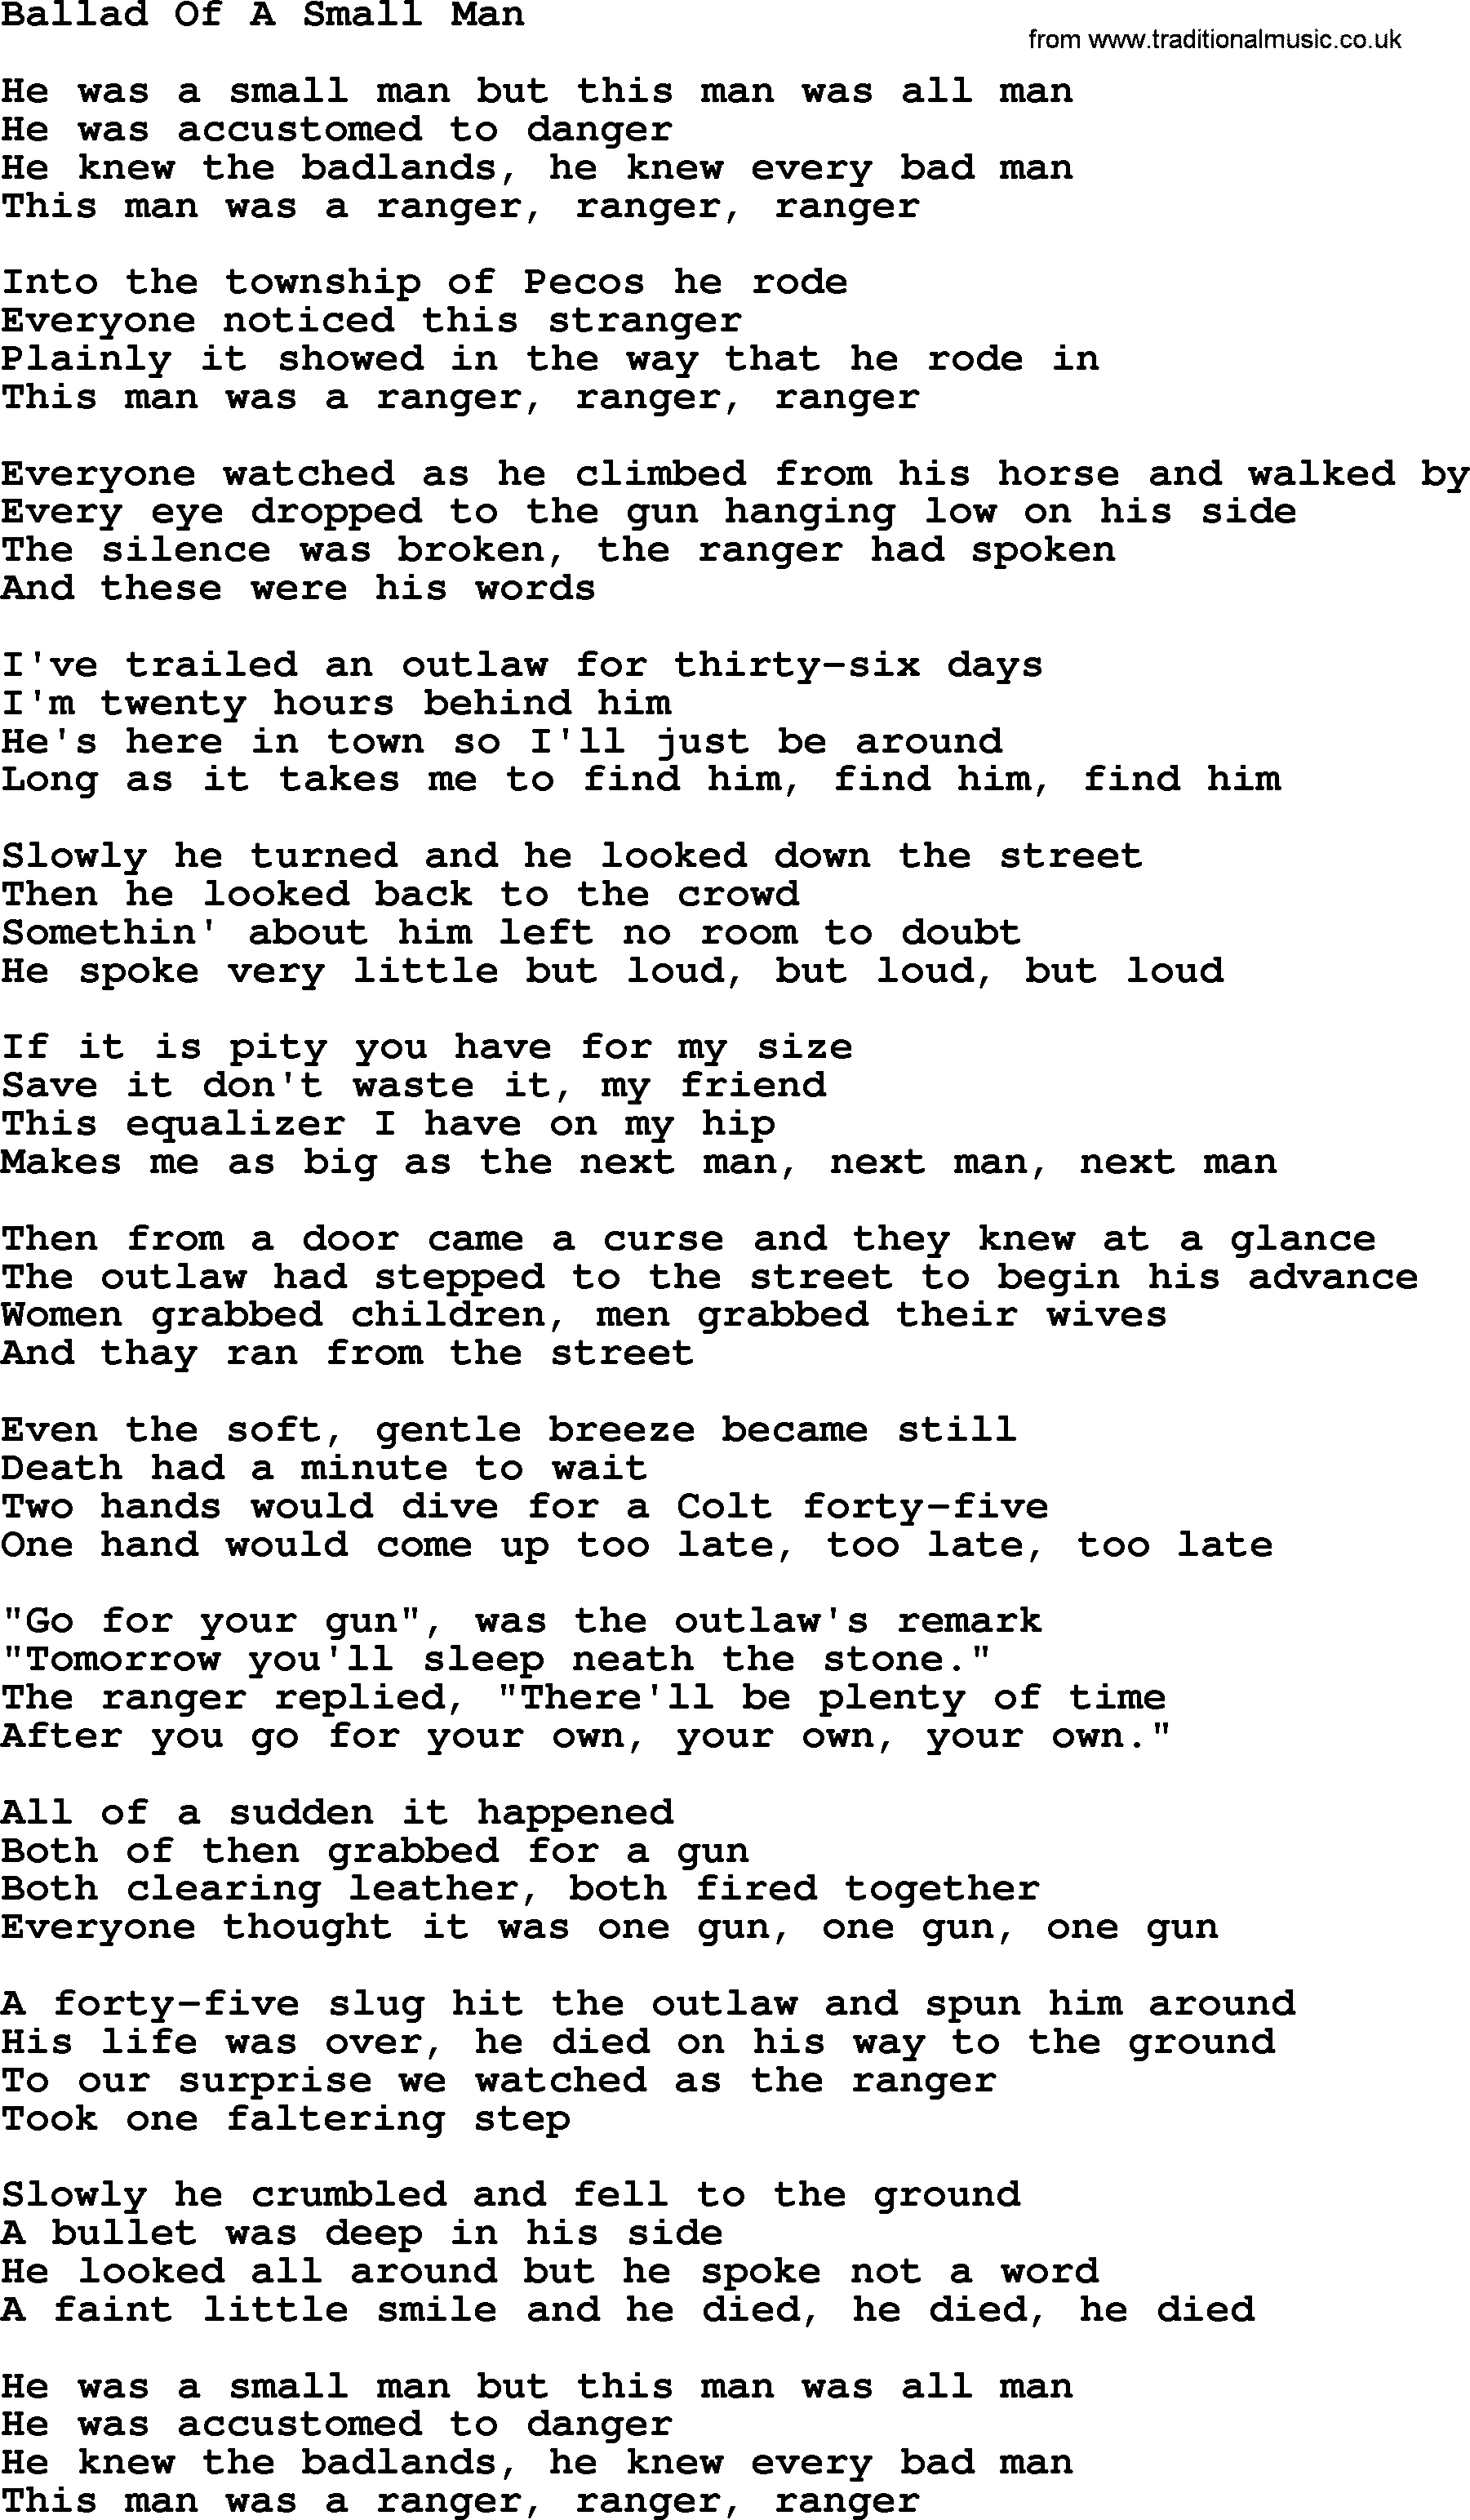 Marty Robbins song: Ballad Of A Small Man, lyrics